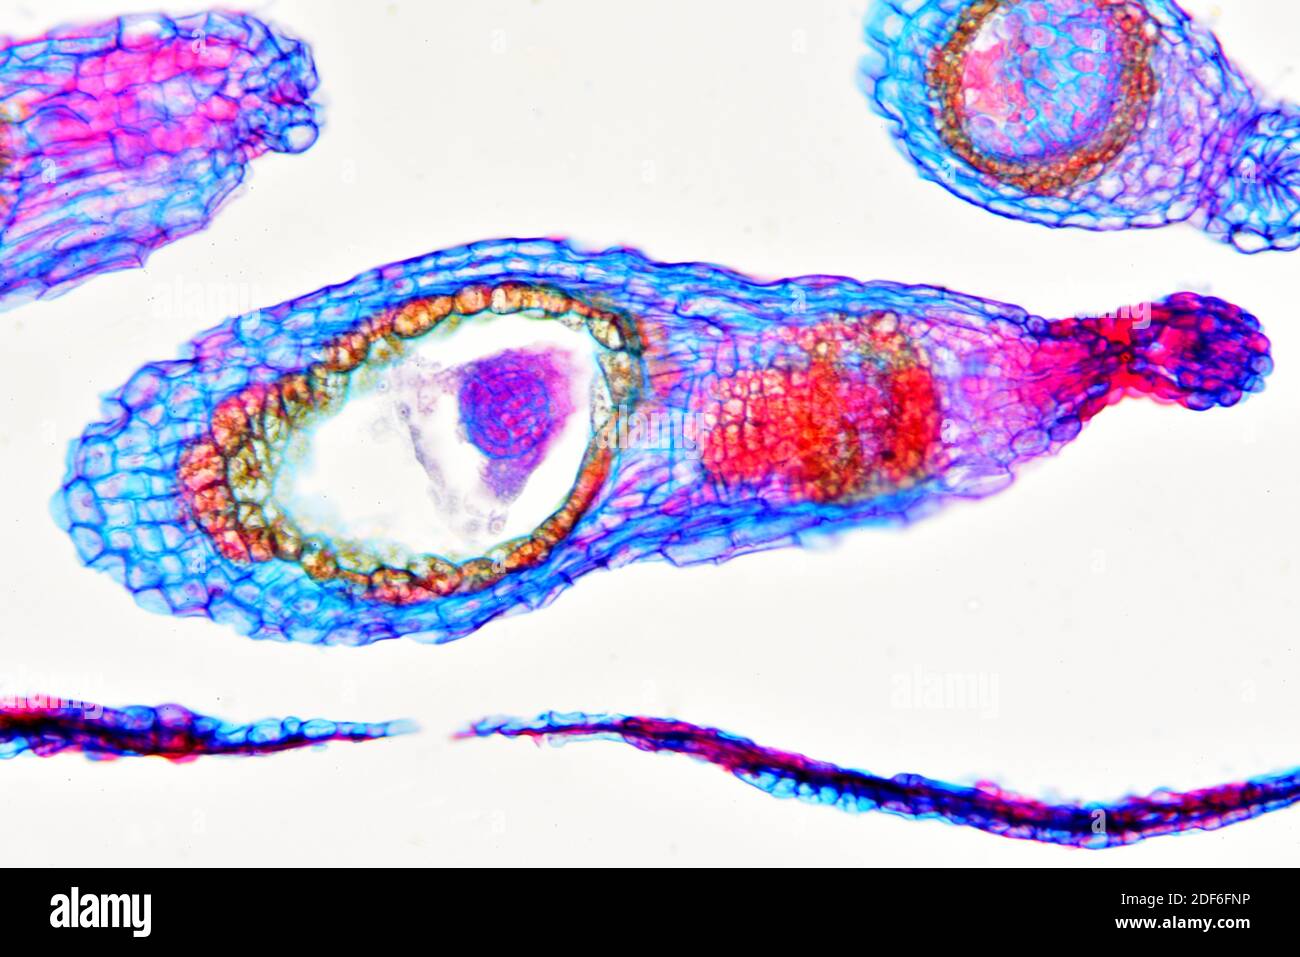 Ovario con embriones de bolso de pastor (Capsella bursa-pastoris). Microscopio óptico X200. Foto de stock